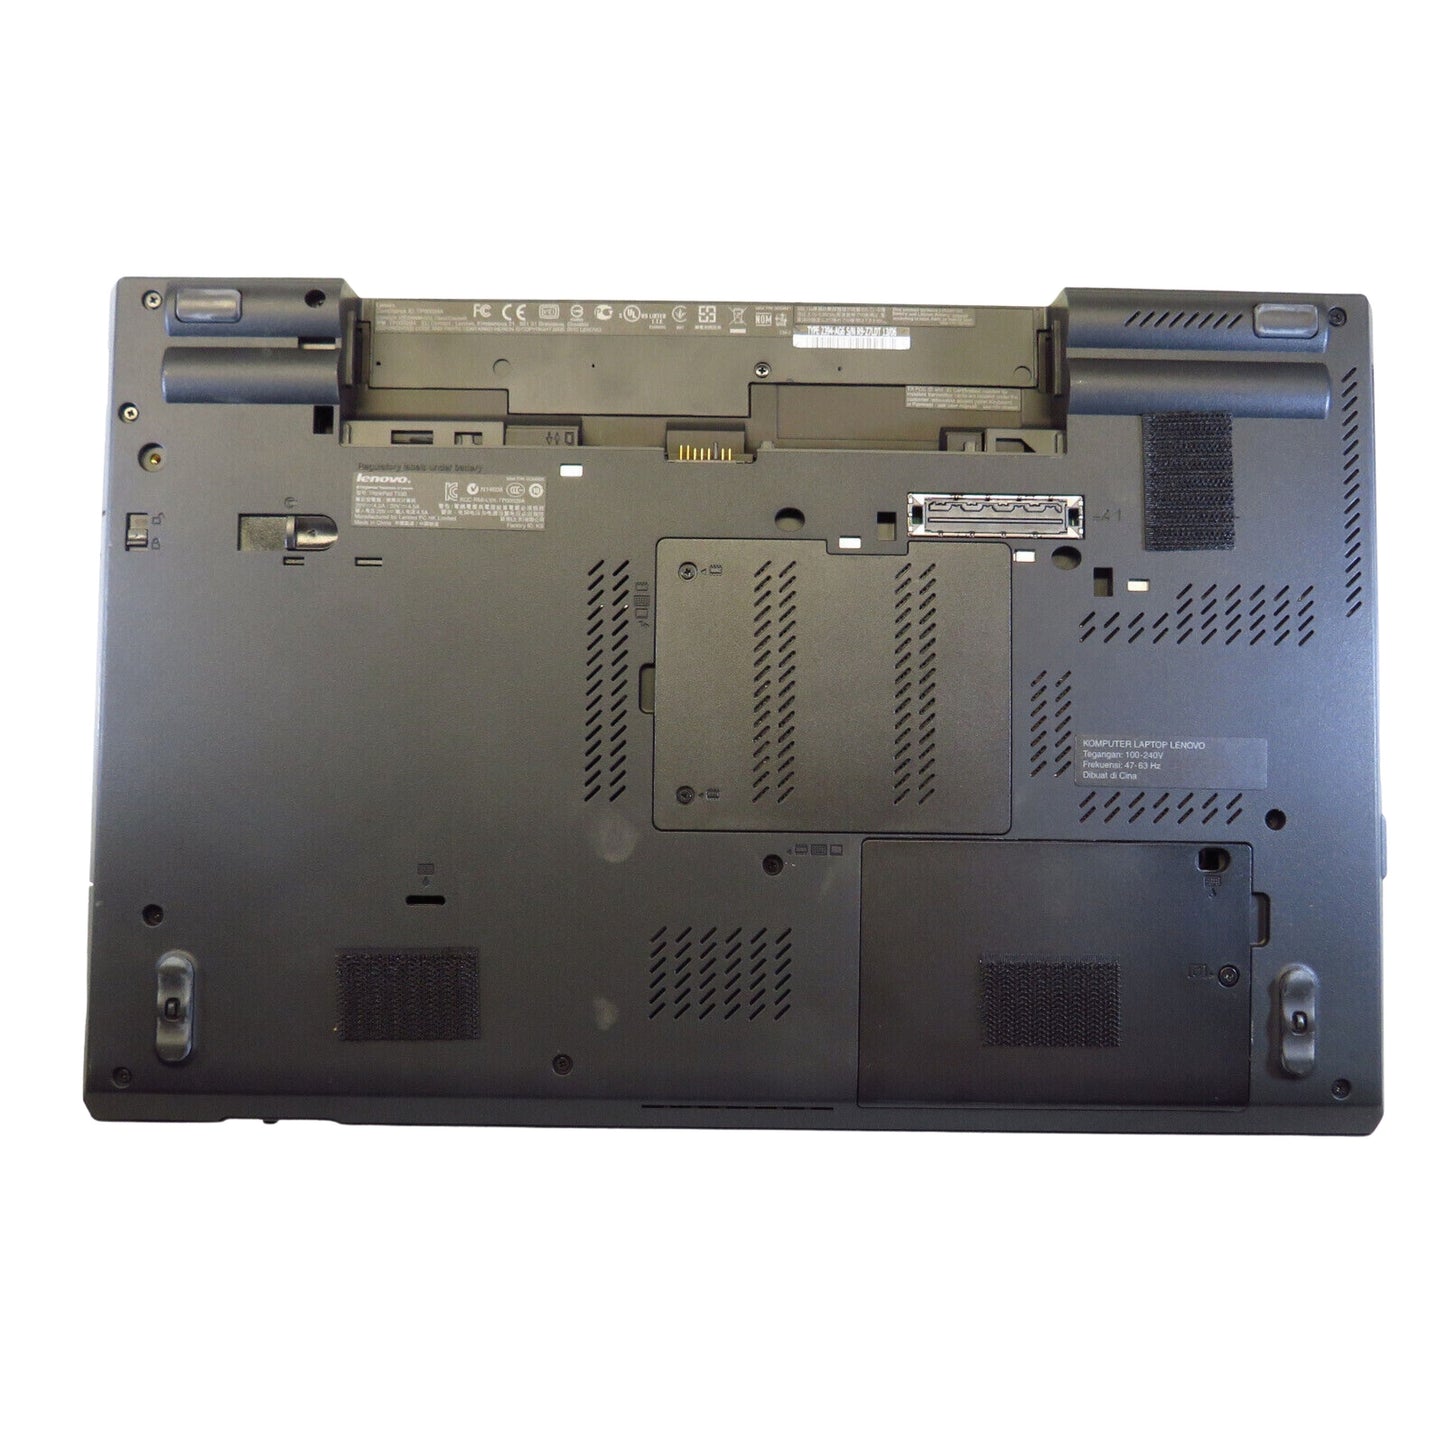 Lenovo Thinkpad T530 15.6" i7-3520M 2.9GHz 8GB RAM No HDD No Battery 2394-AG6 (Refurbished)